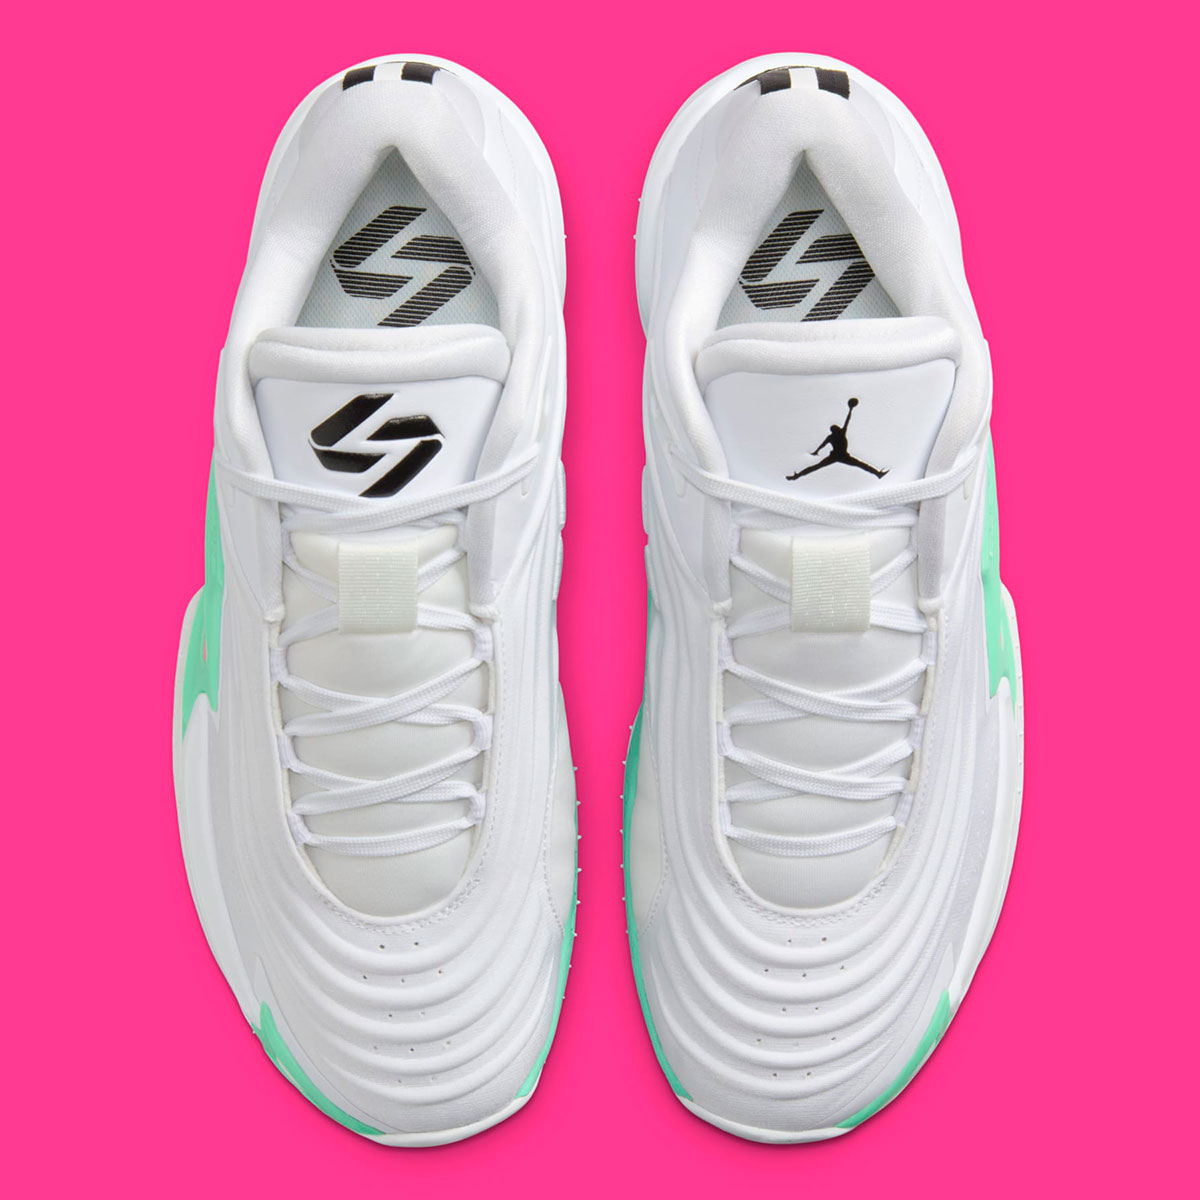 Air Bred Emerald jordan 1 Zoom Air sneakers Photo Finish Hq5054 107 Release Date 10